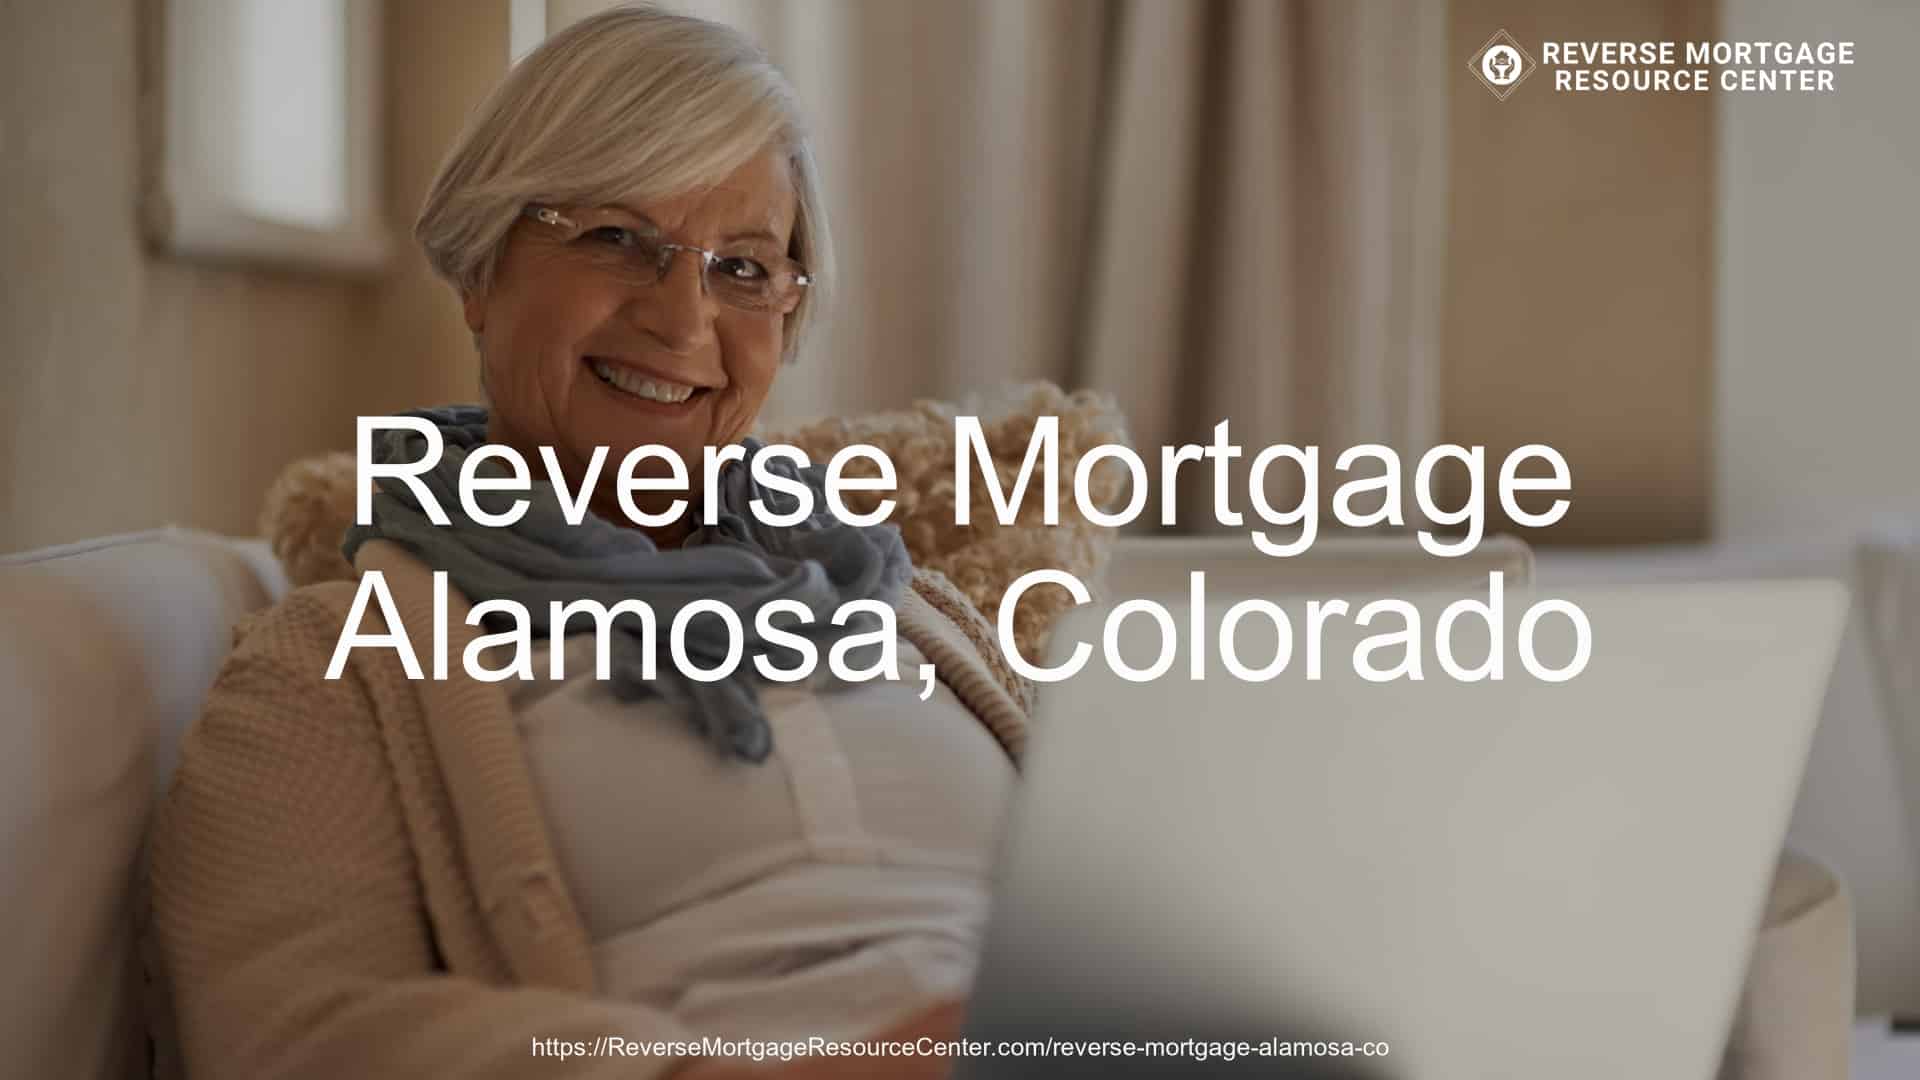 Reverse Mortgage Loans in Alamosa Colorado